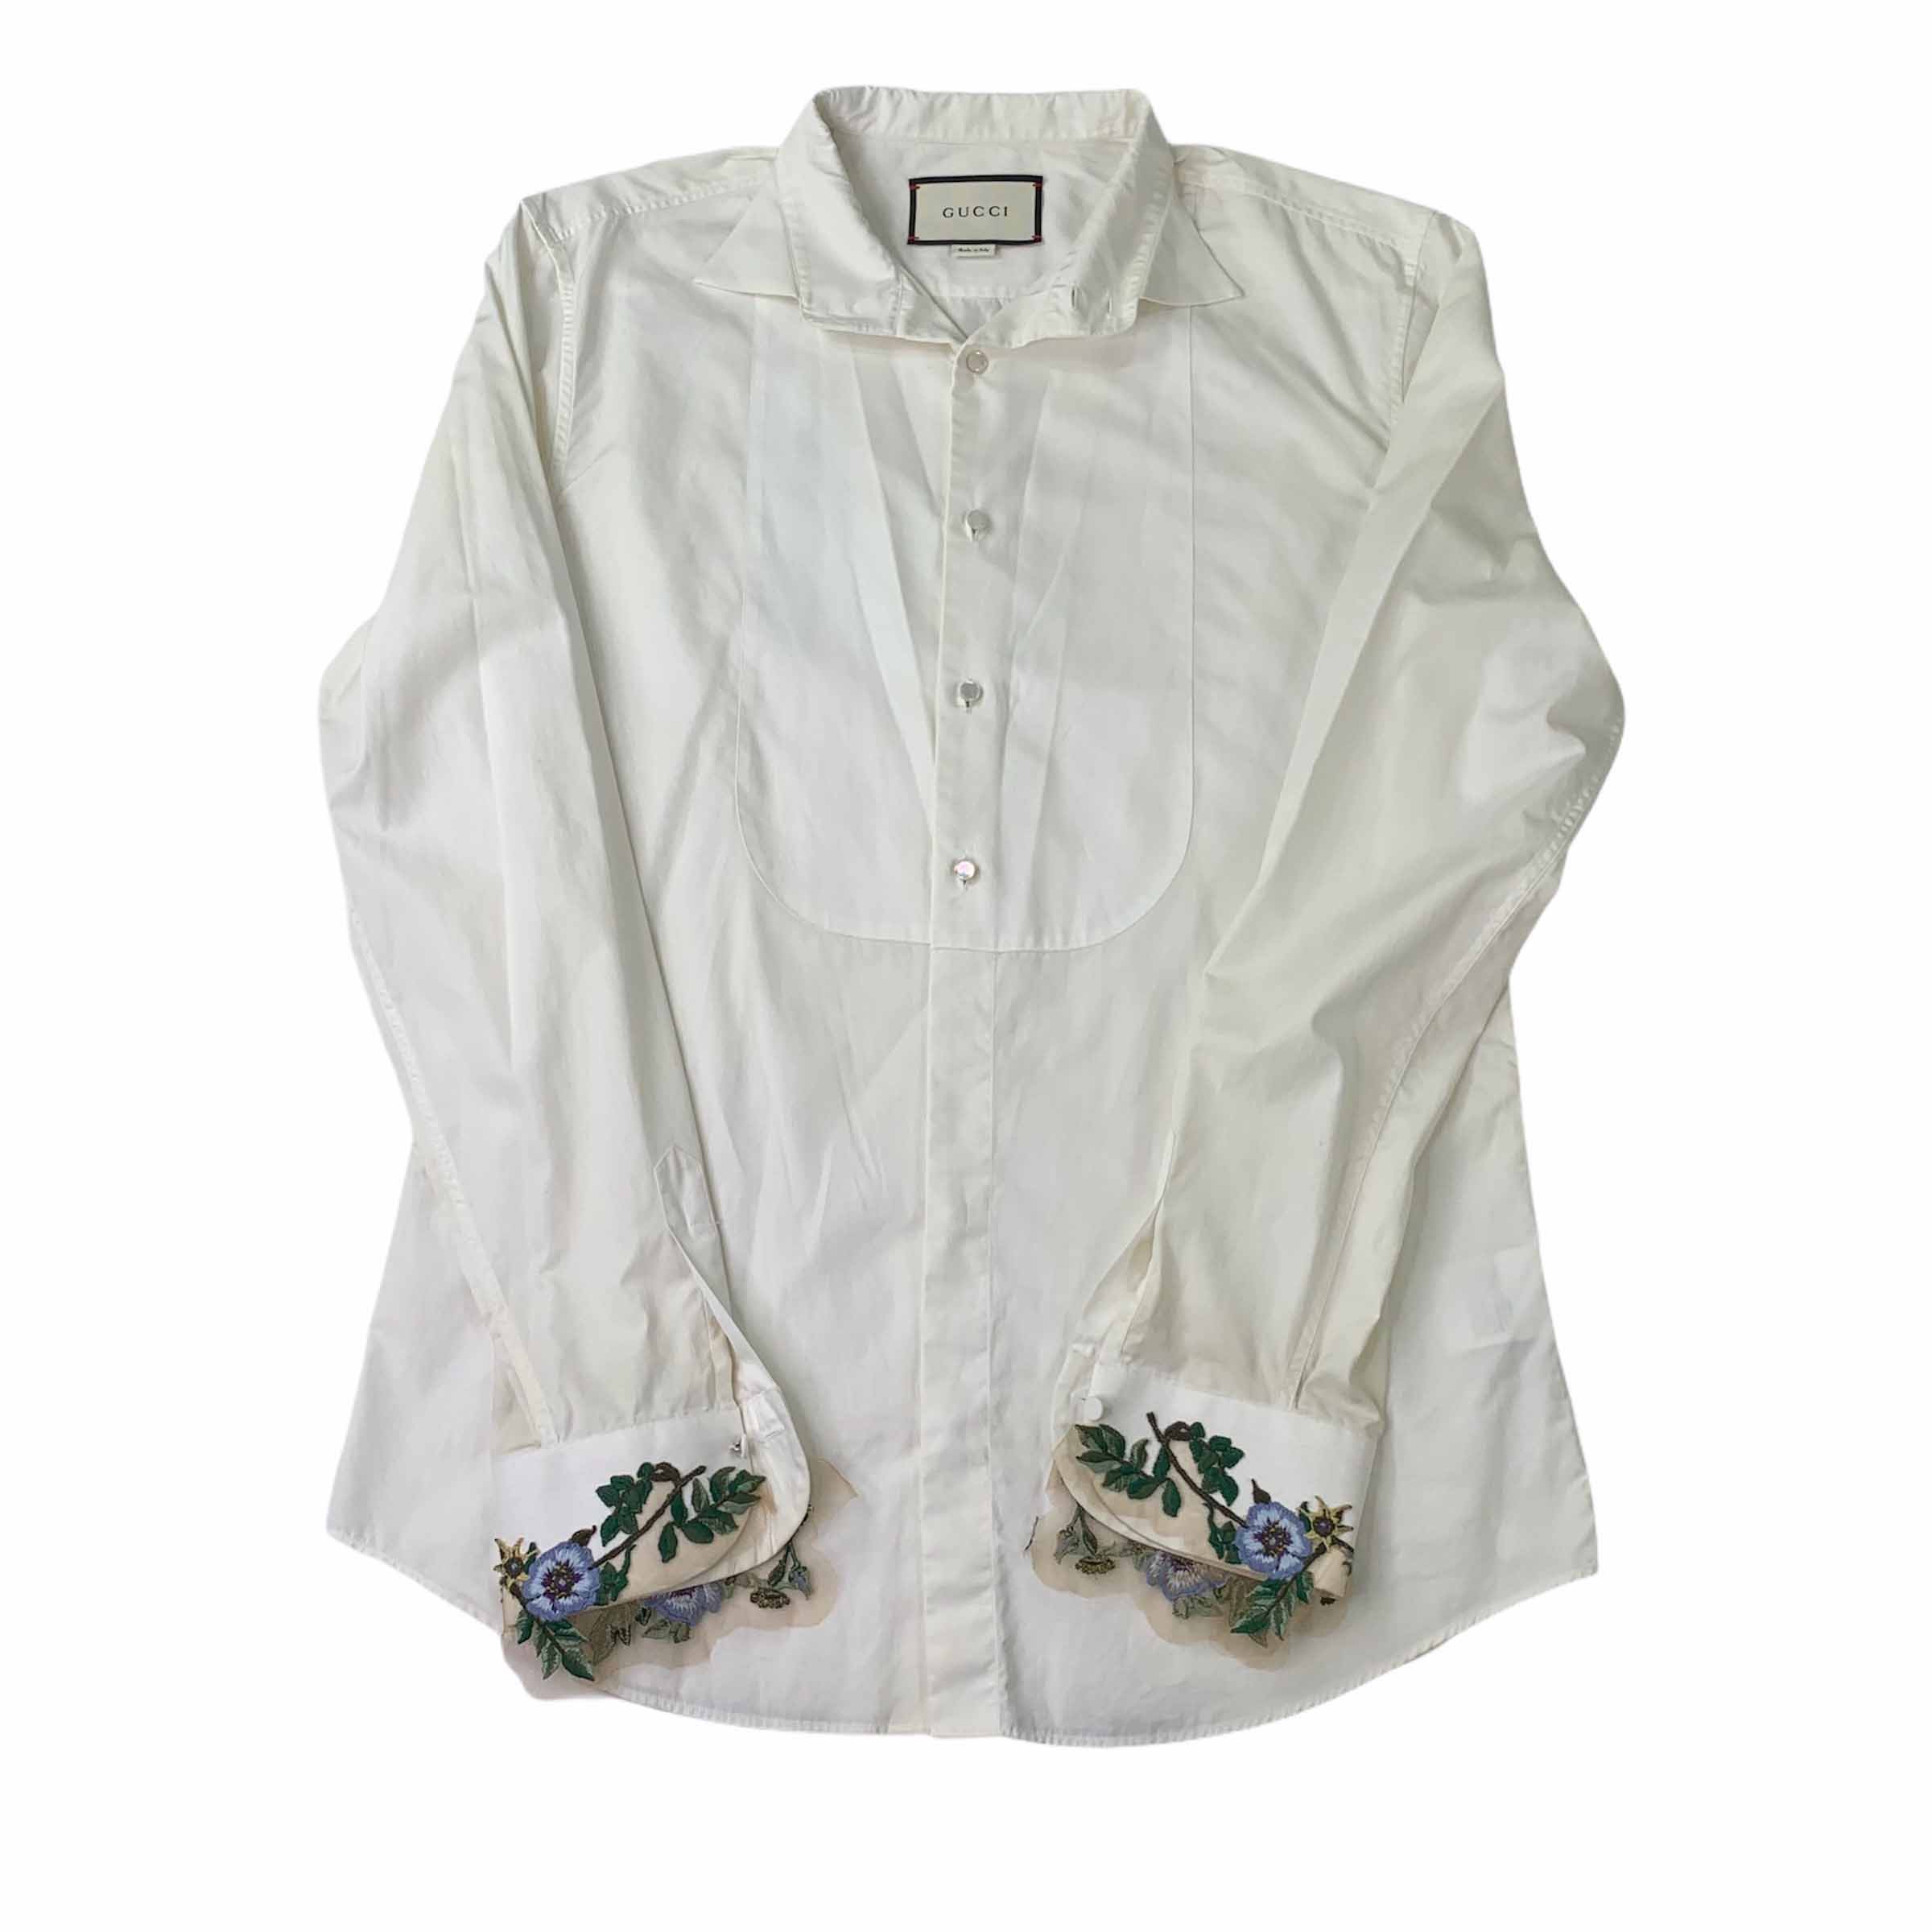 [Gucci] Embroidered Cuffs White Shirt - Size 43